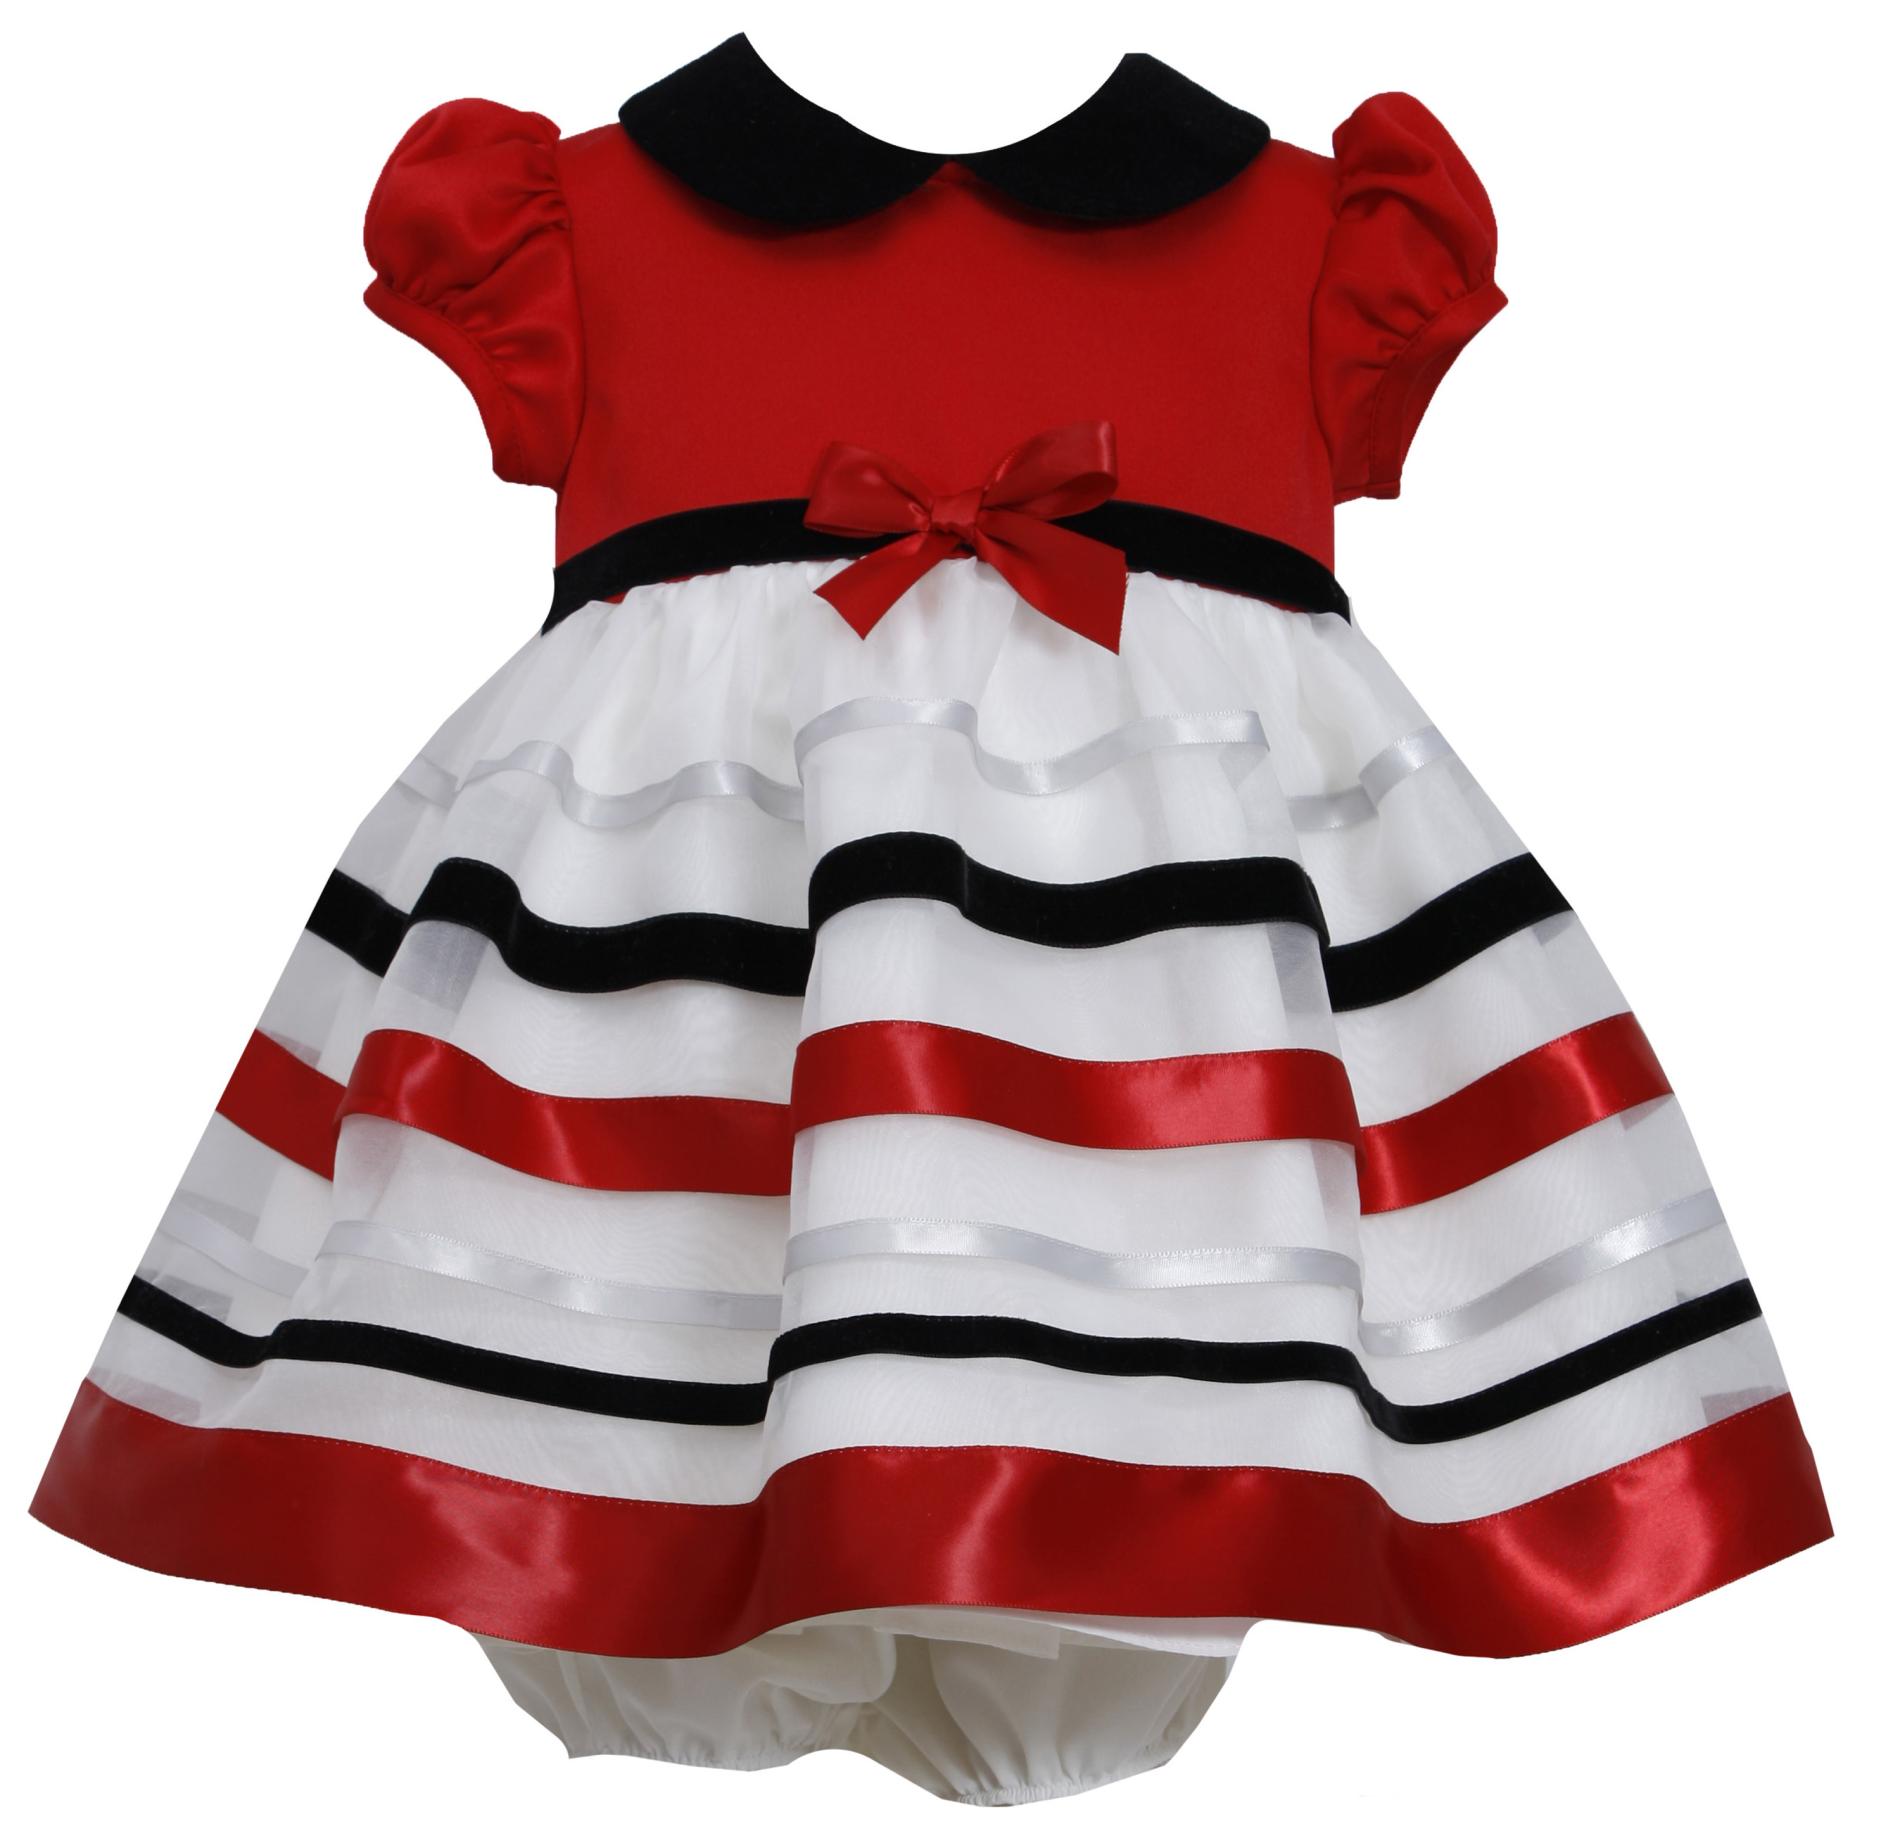 Ashley Ann Infant & Toddler Girl's Occasion Dress & Diaper Cover - Striped